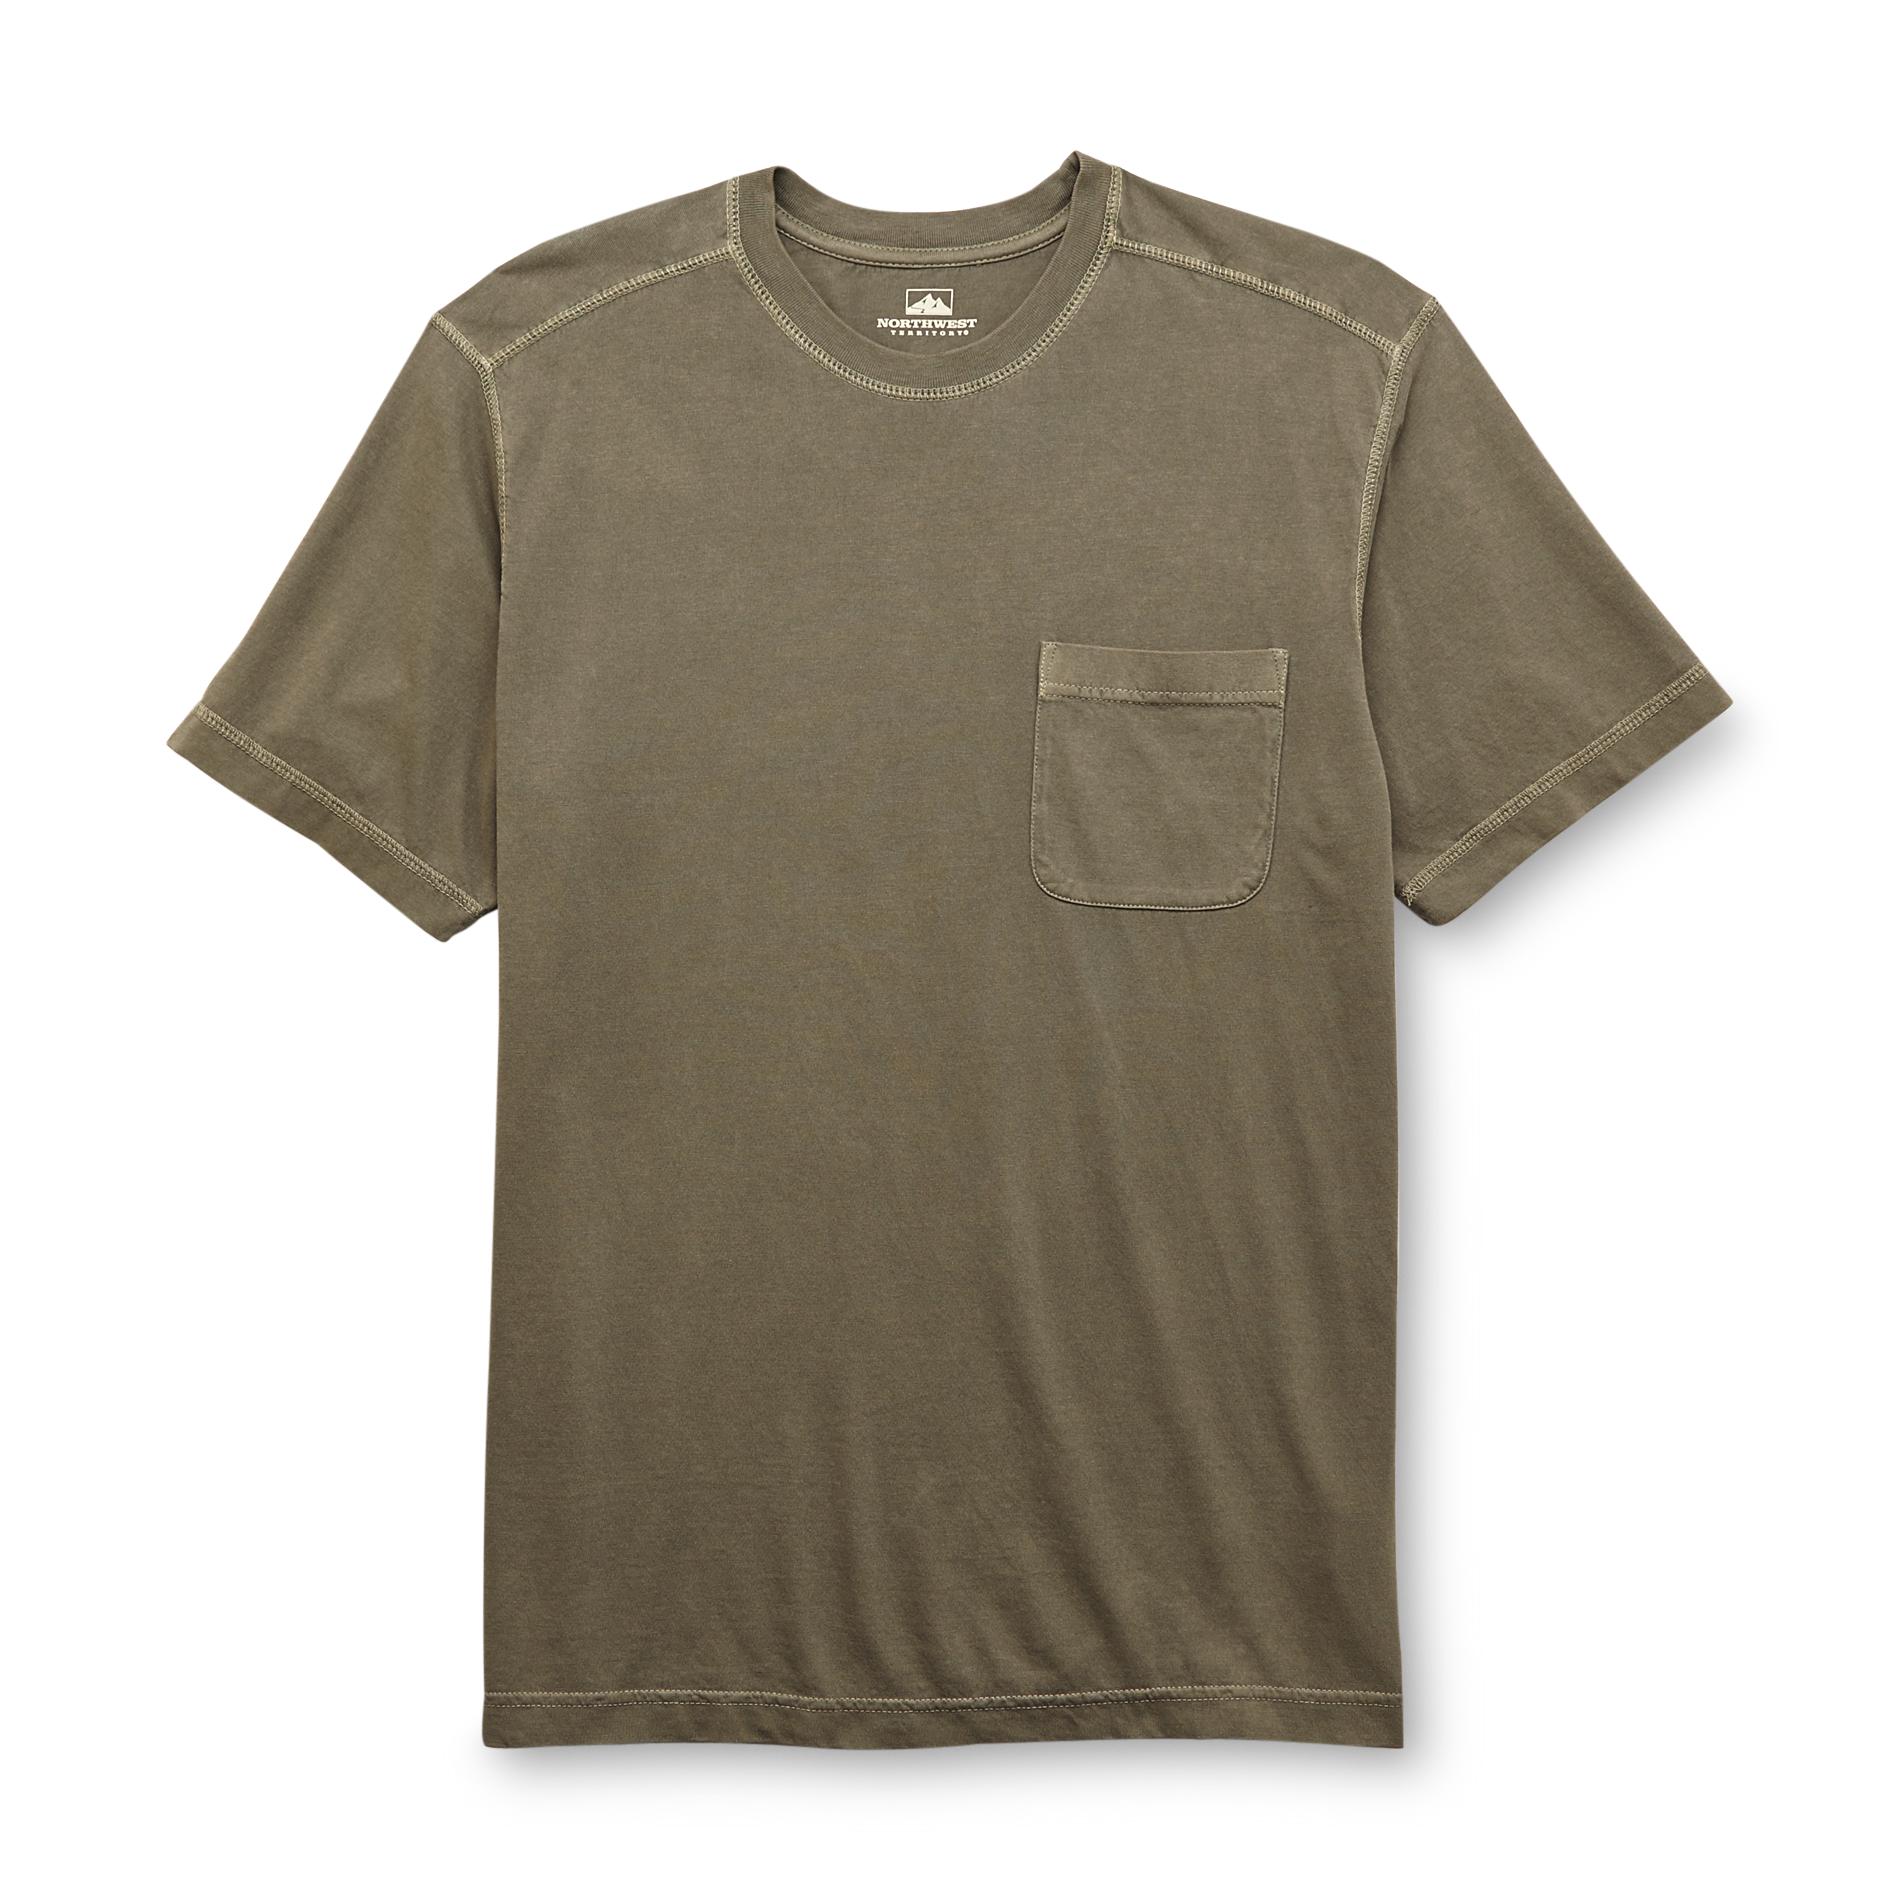 Northwest Territory Men's Pocket T-Shirt